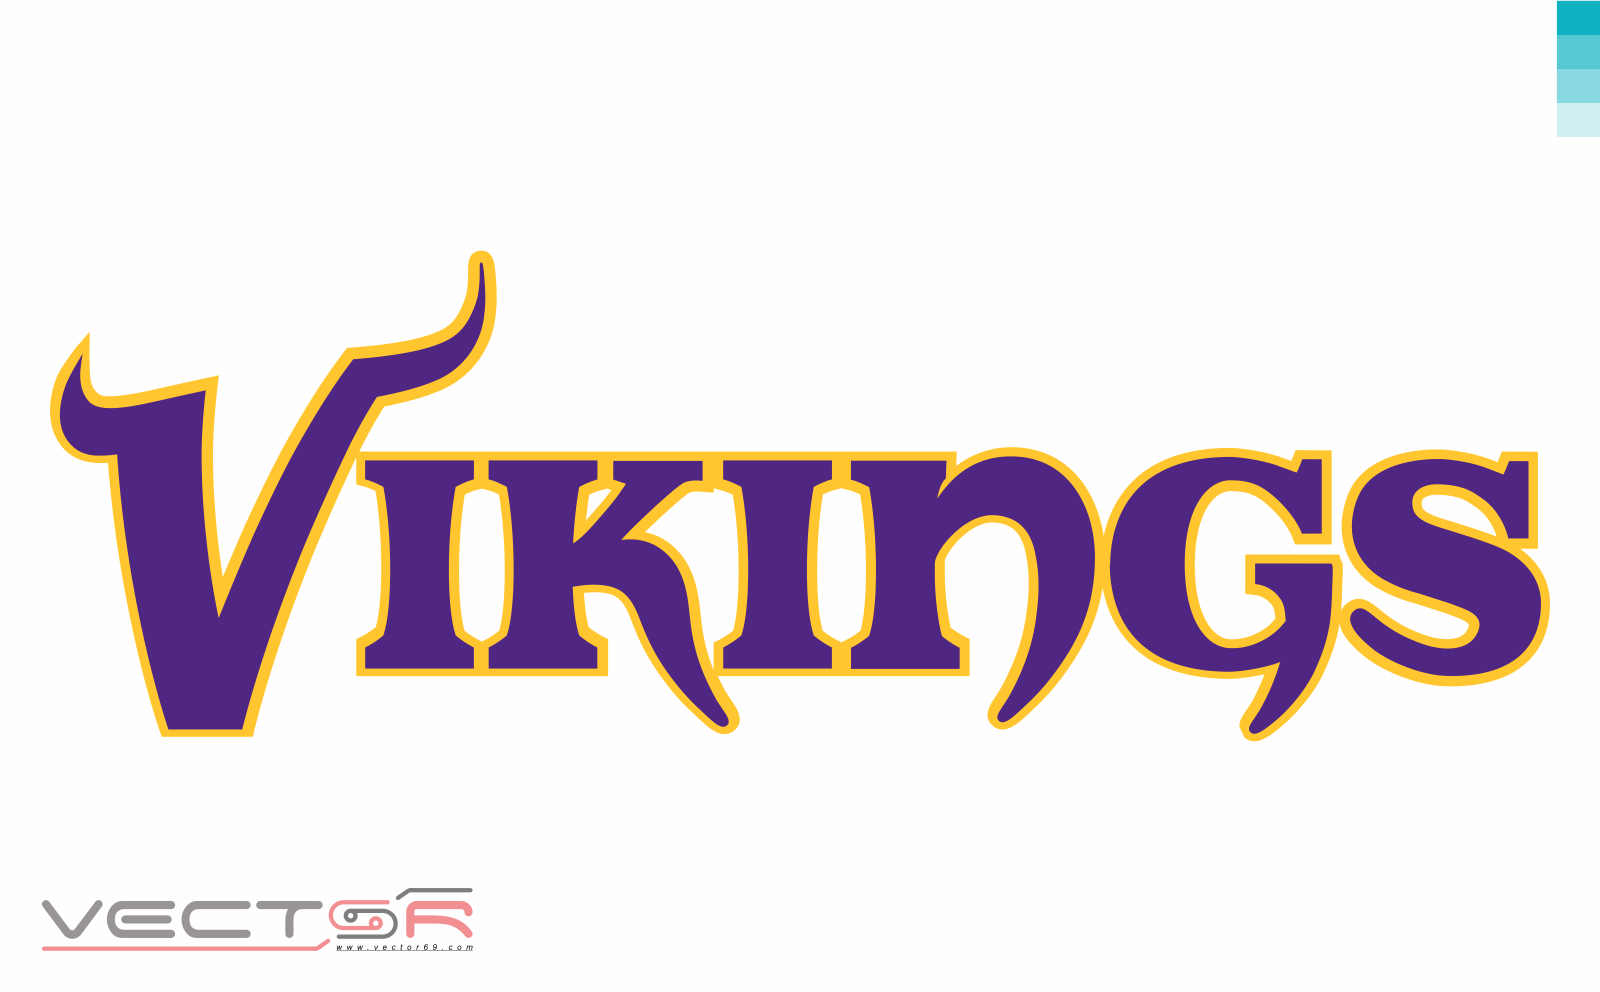 Minnesota Vikings Wordmark - Download Vector File SVG (Scalable Vector Graphics)